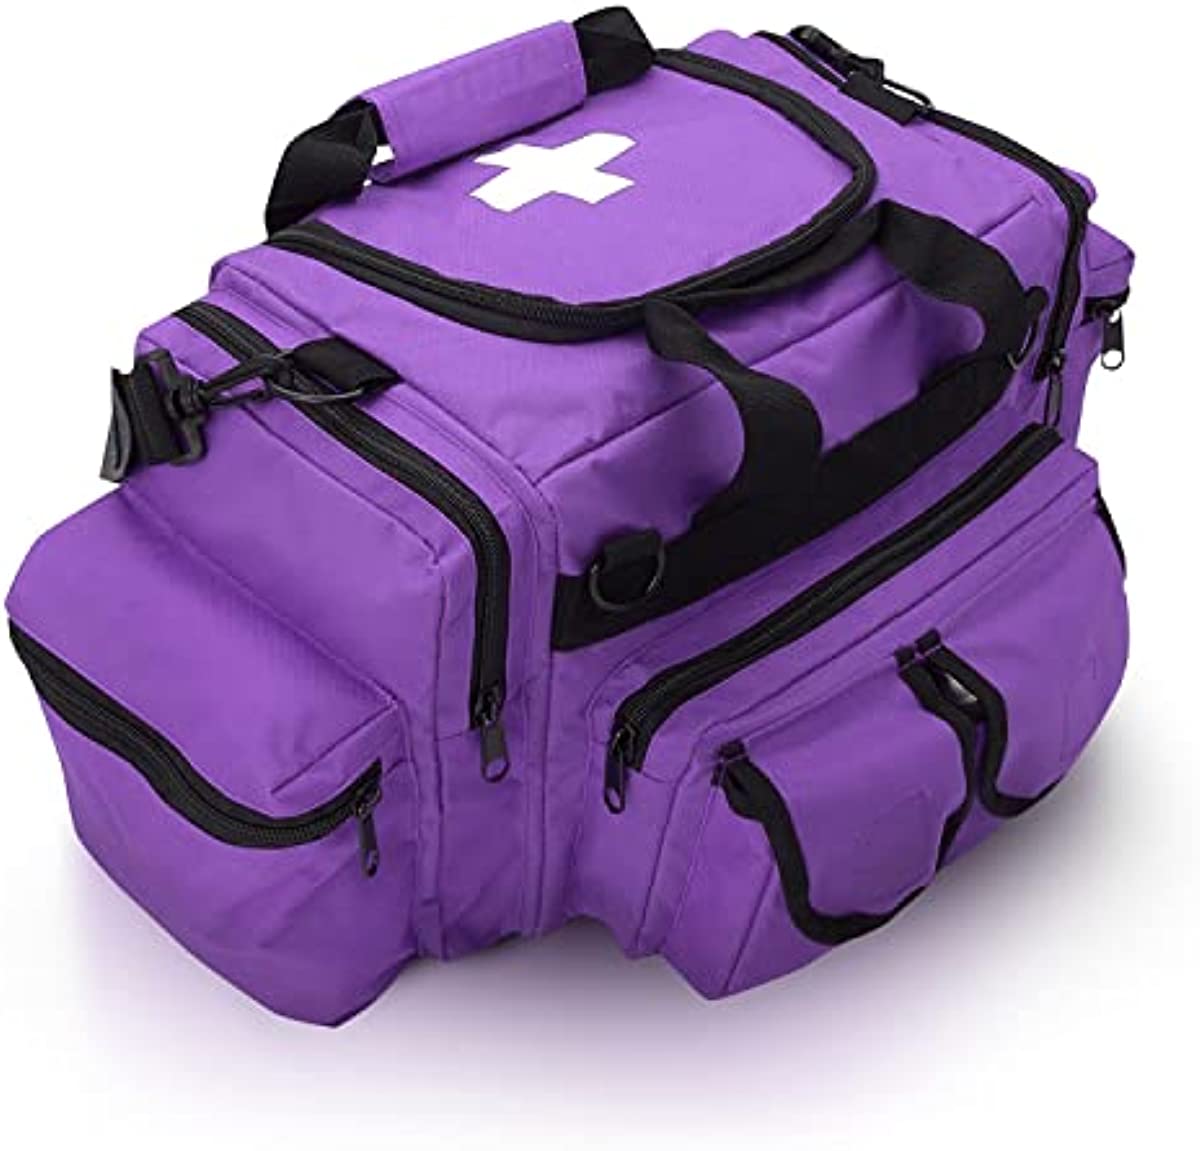 ASA TECHMED First Aid Responder EMS Emergency Medical Trauma Bag Deluxe, Purple